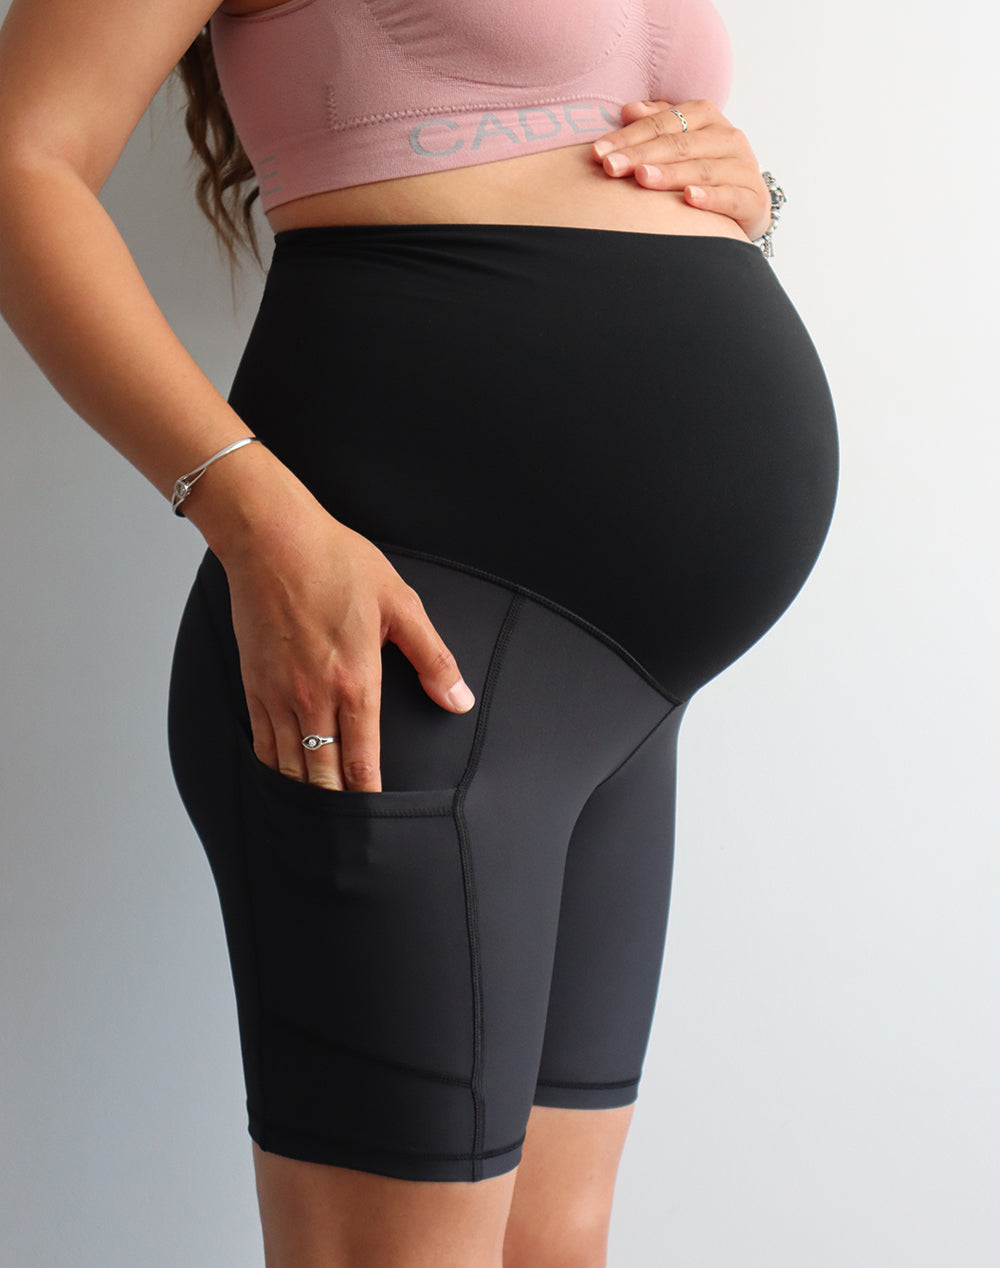 Pregnancy Pocket Bike Shorts in Black, Maternity Activewear